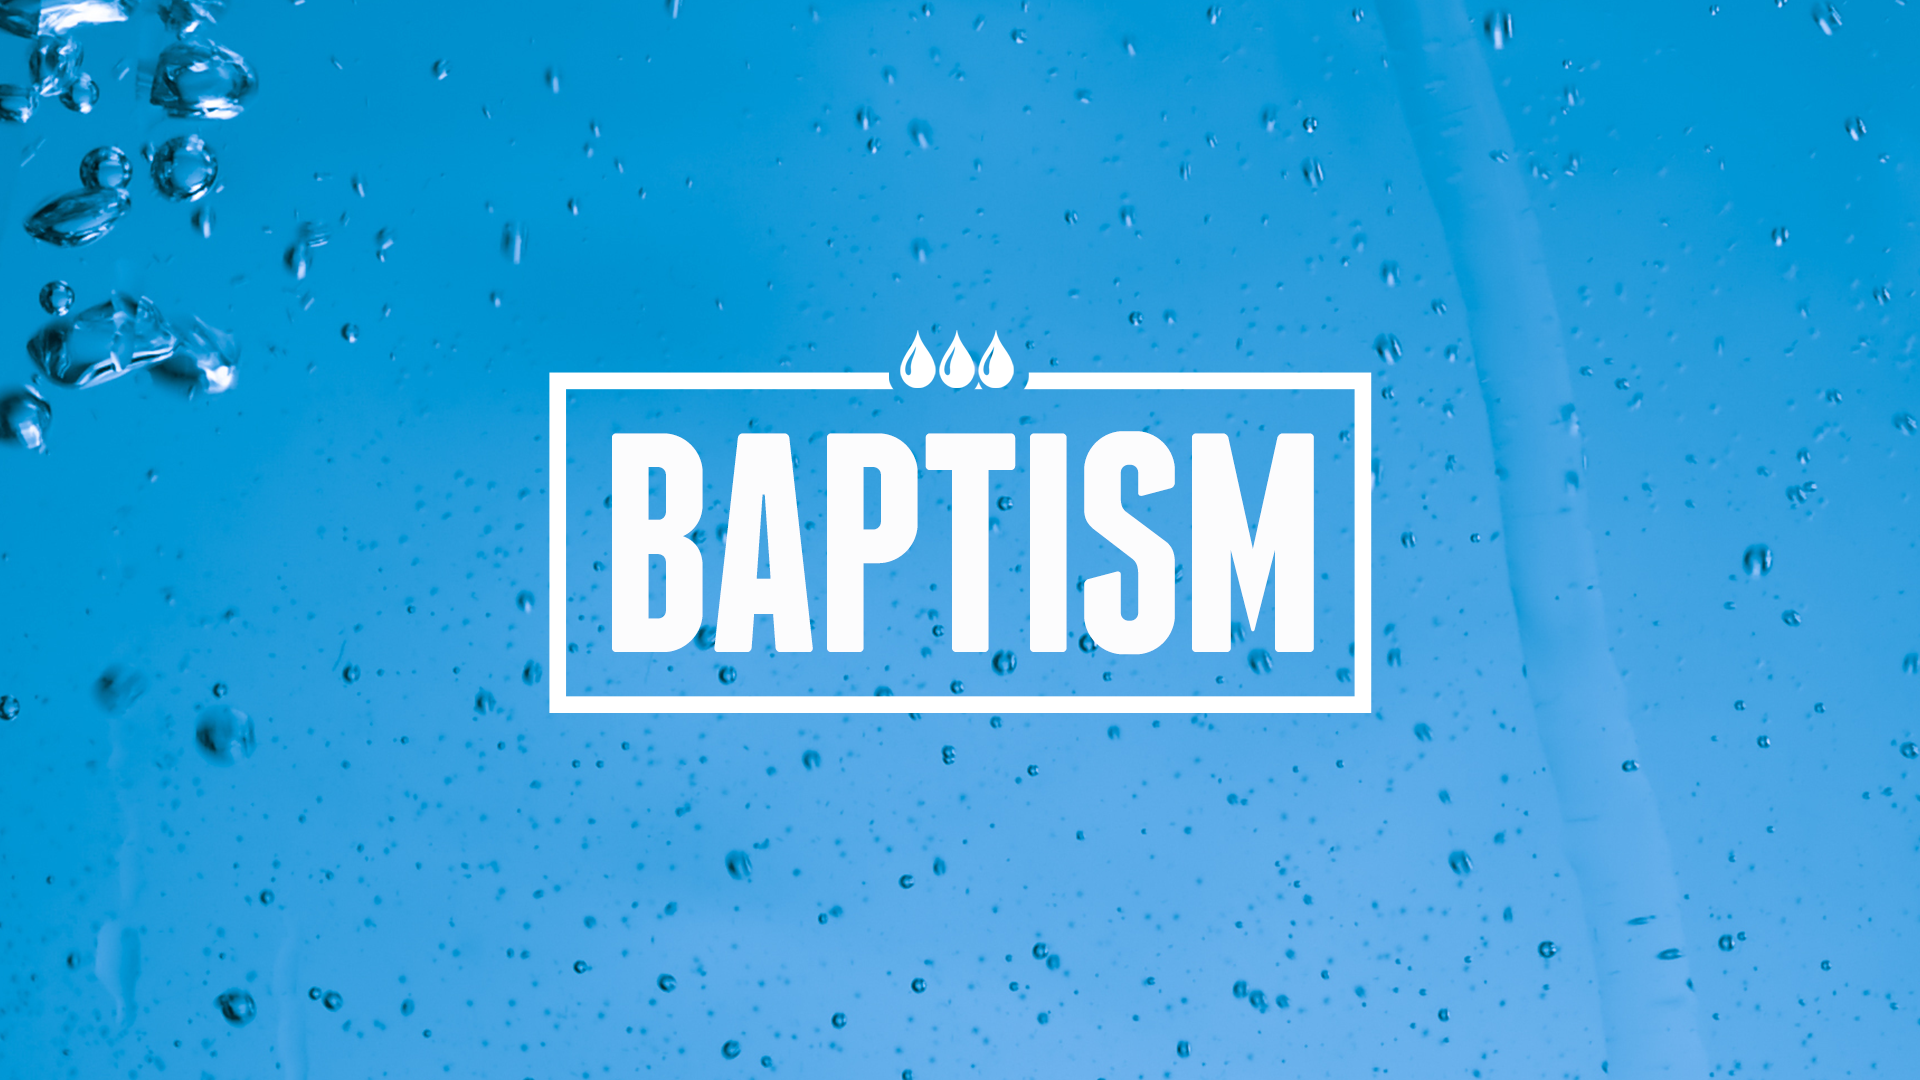 23.baptism